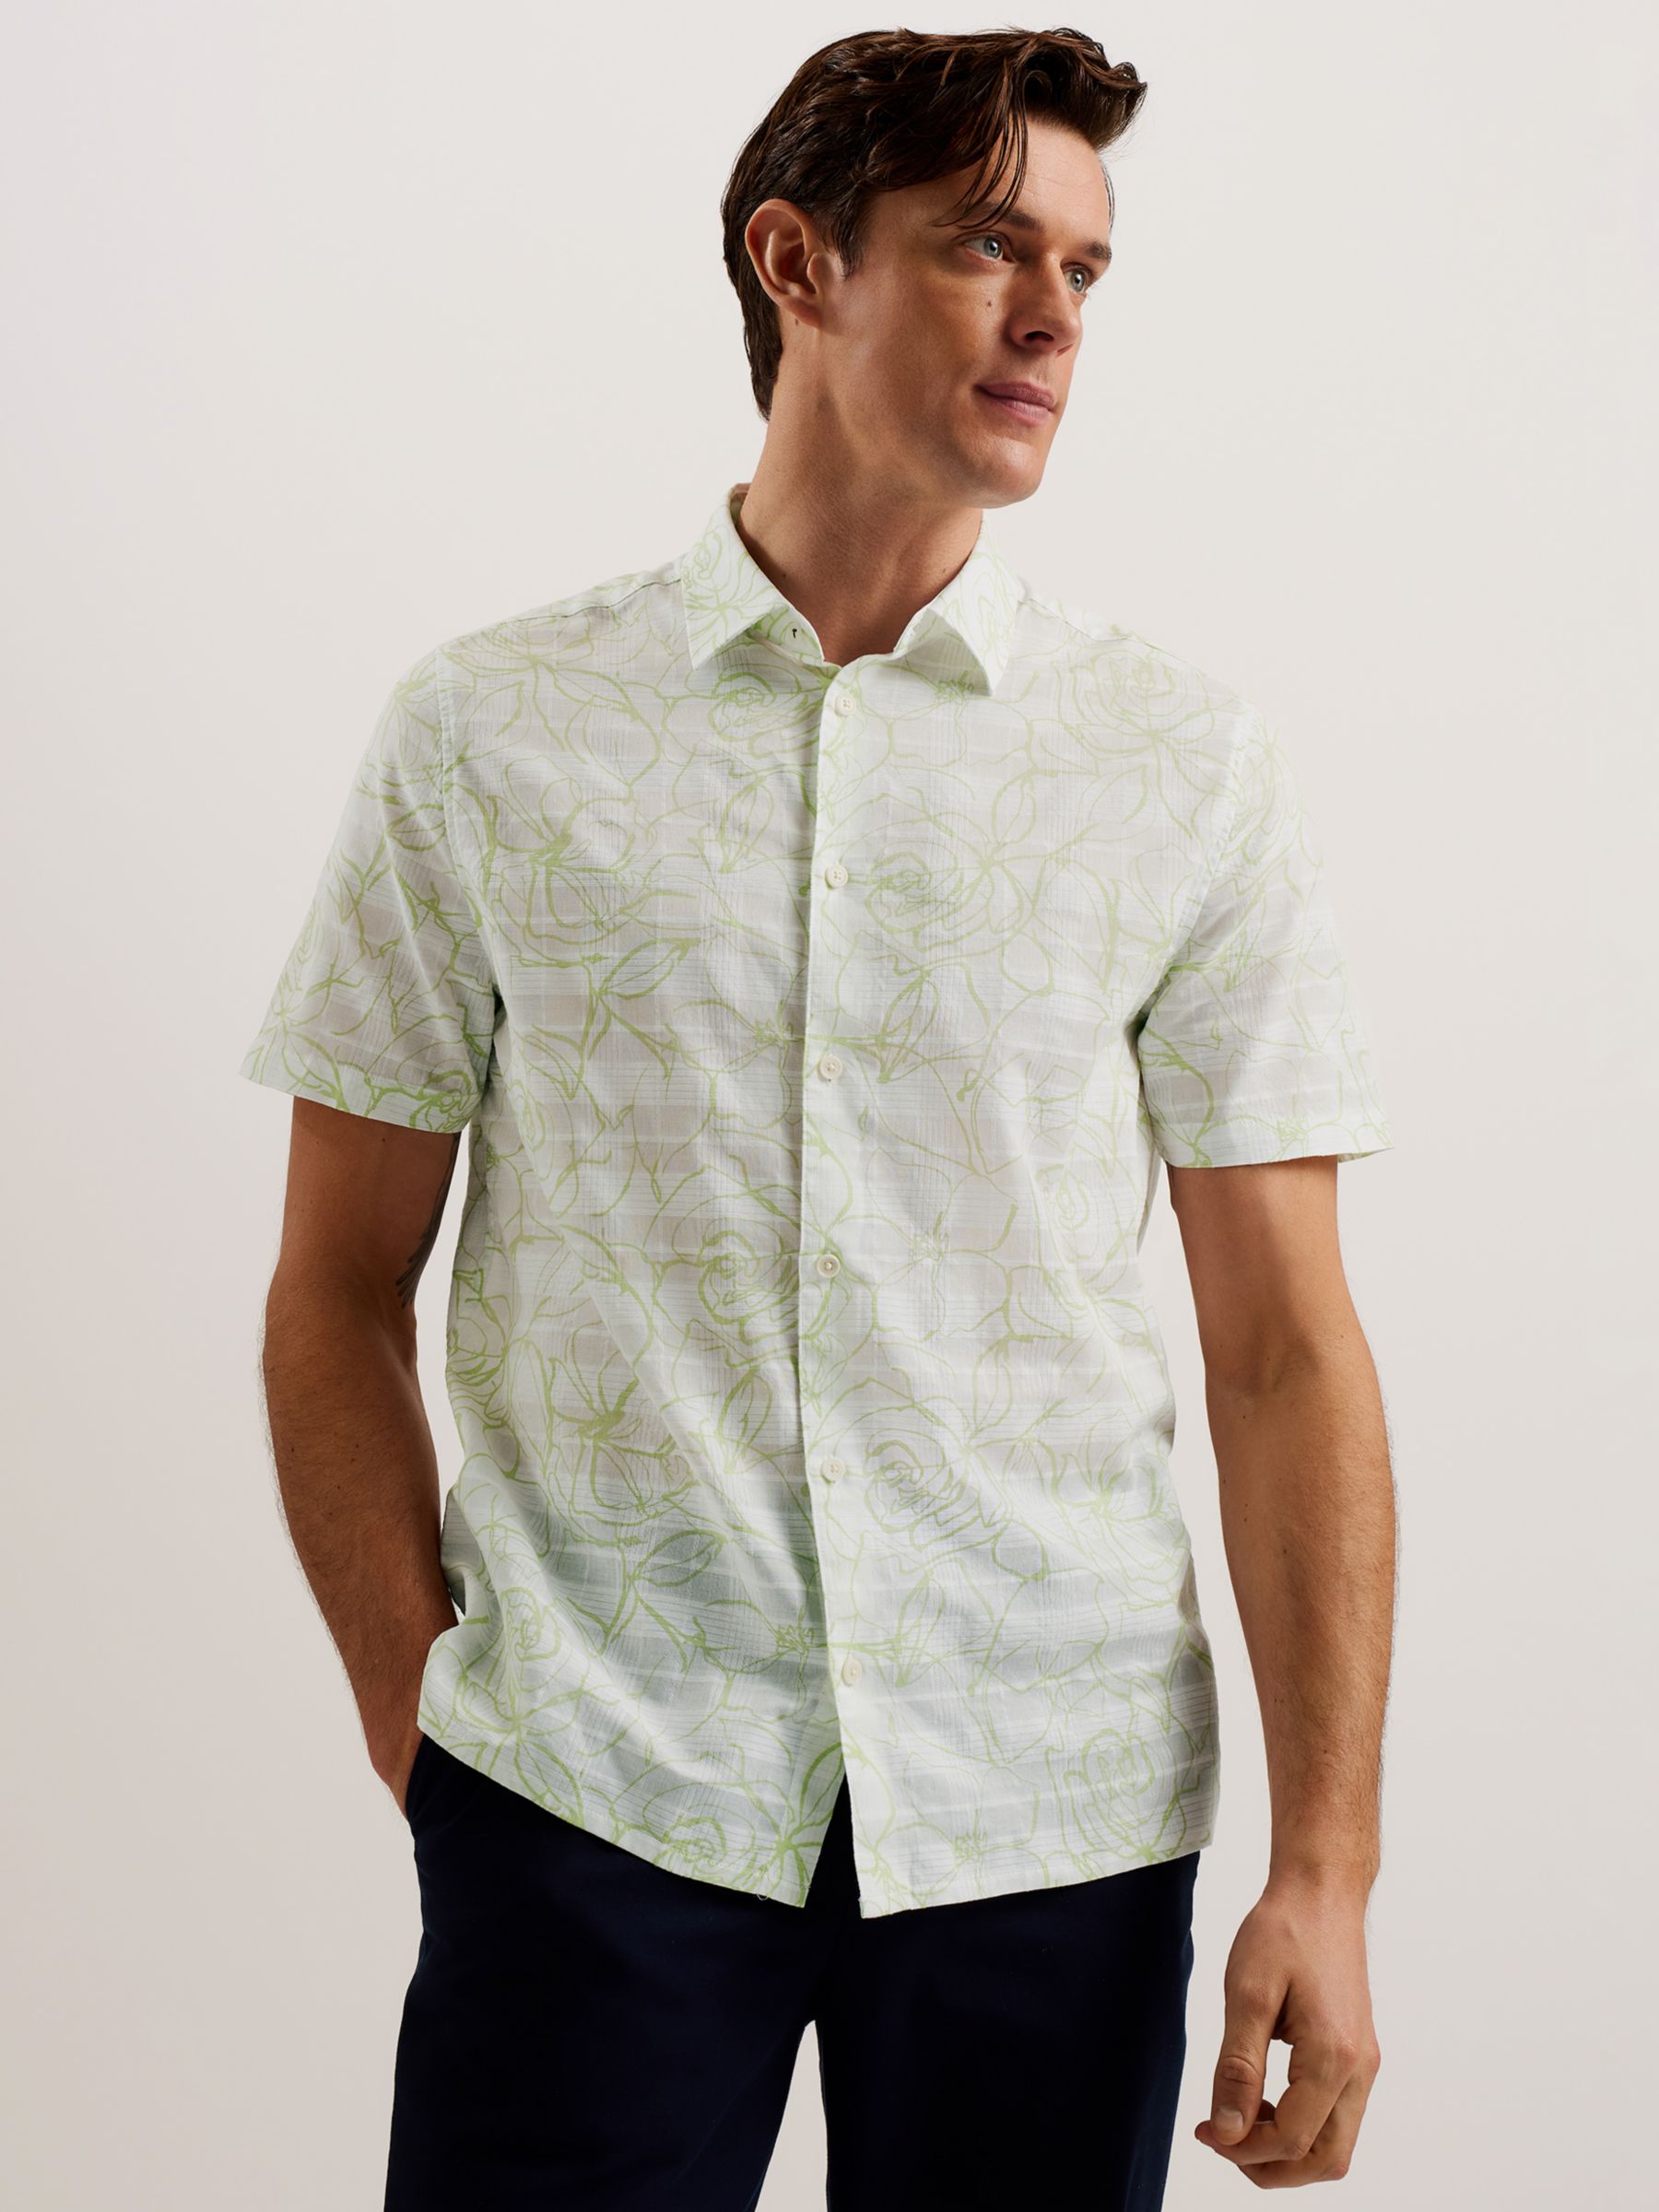 Ted Baker Cavu Floral Outline Short Sleeve Cotton Shirt, White, L